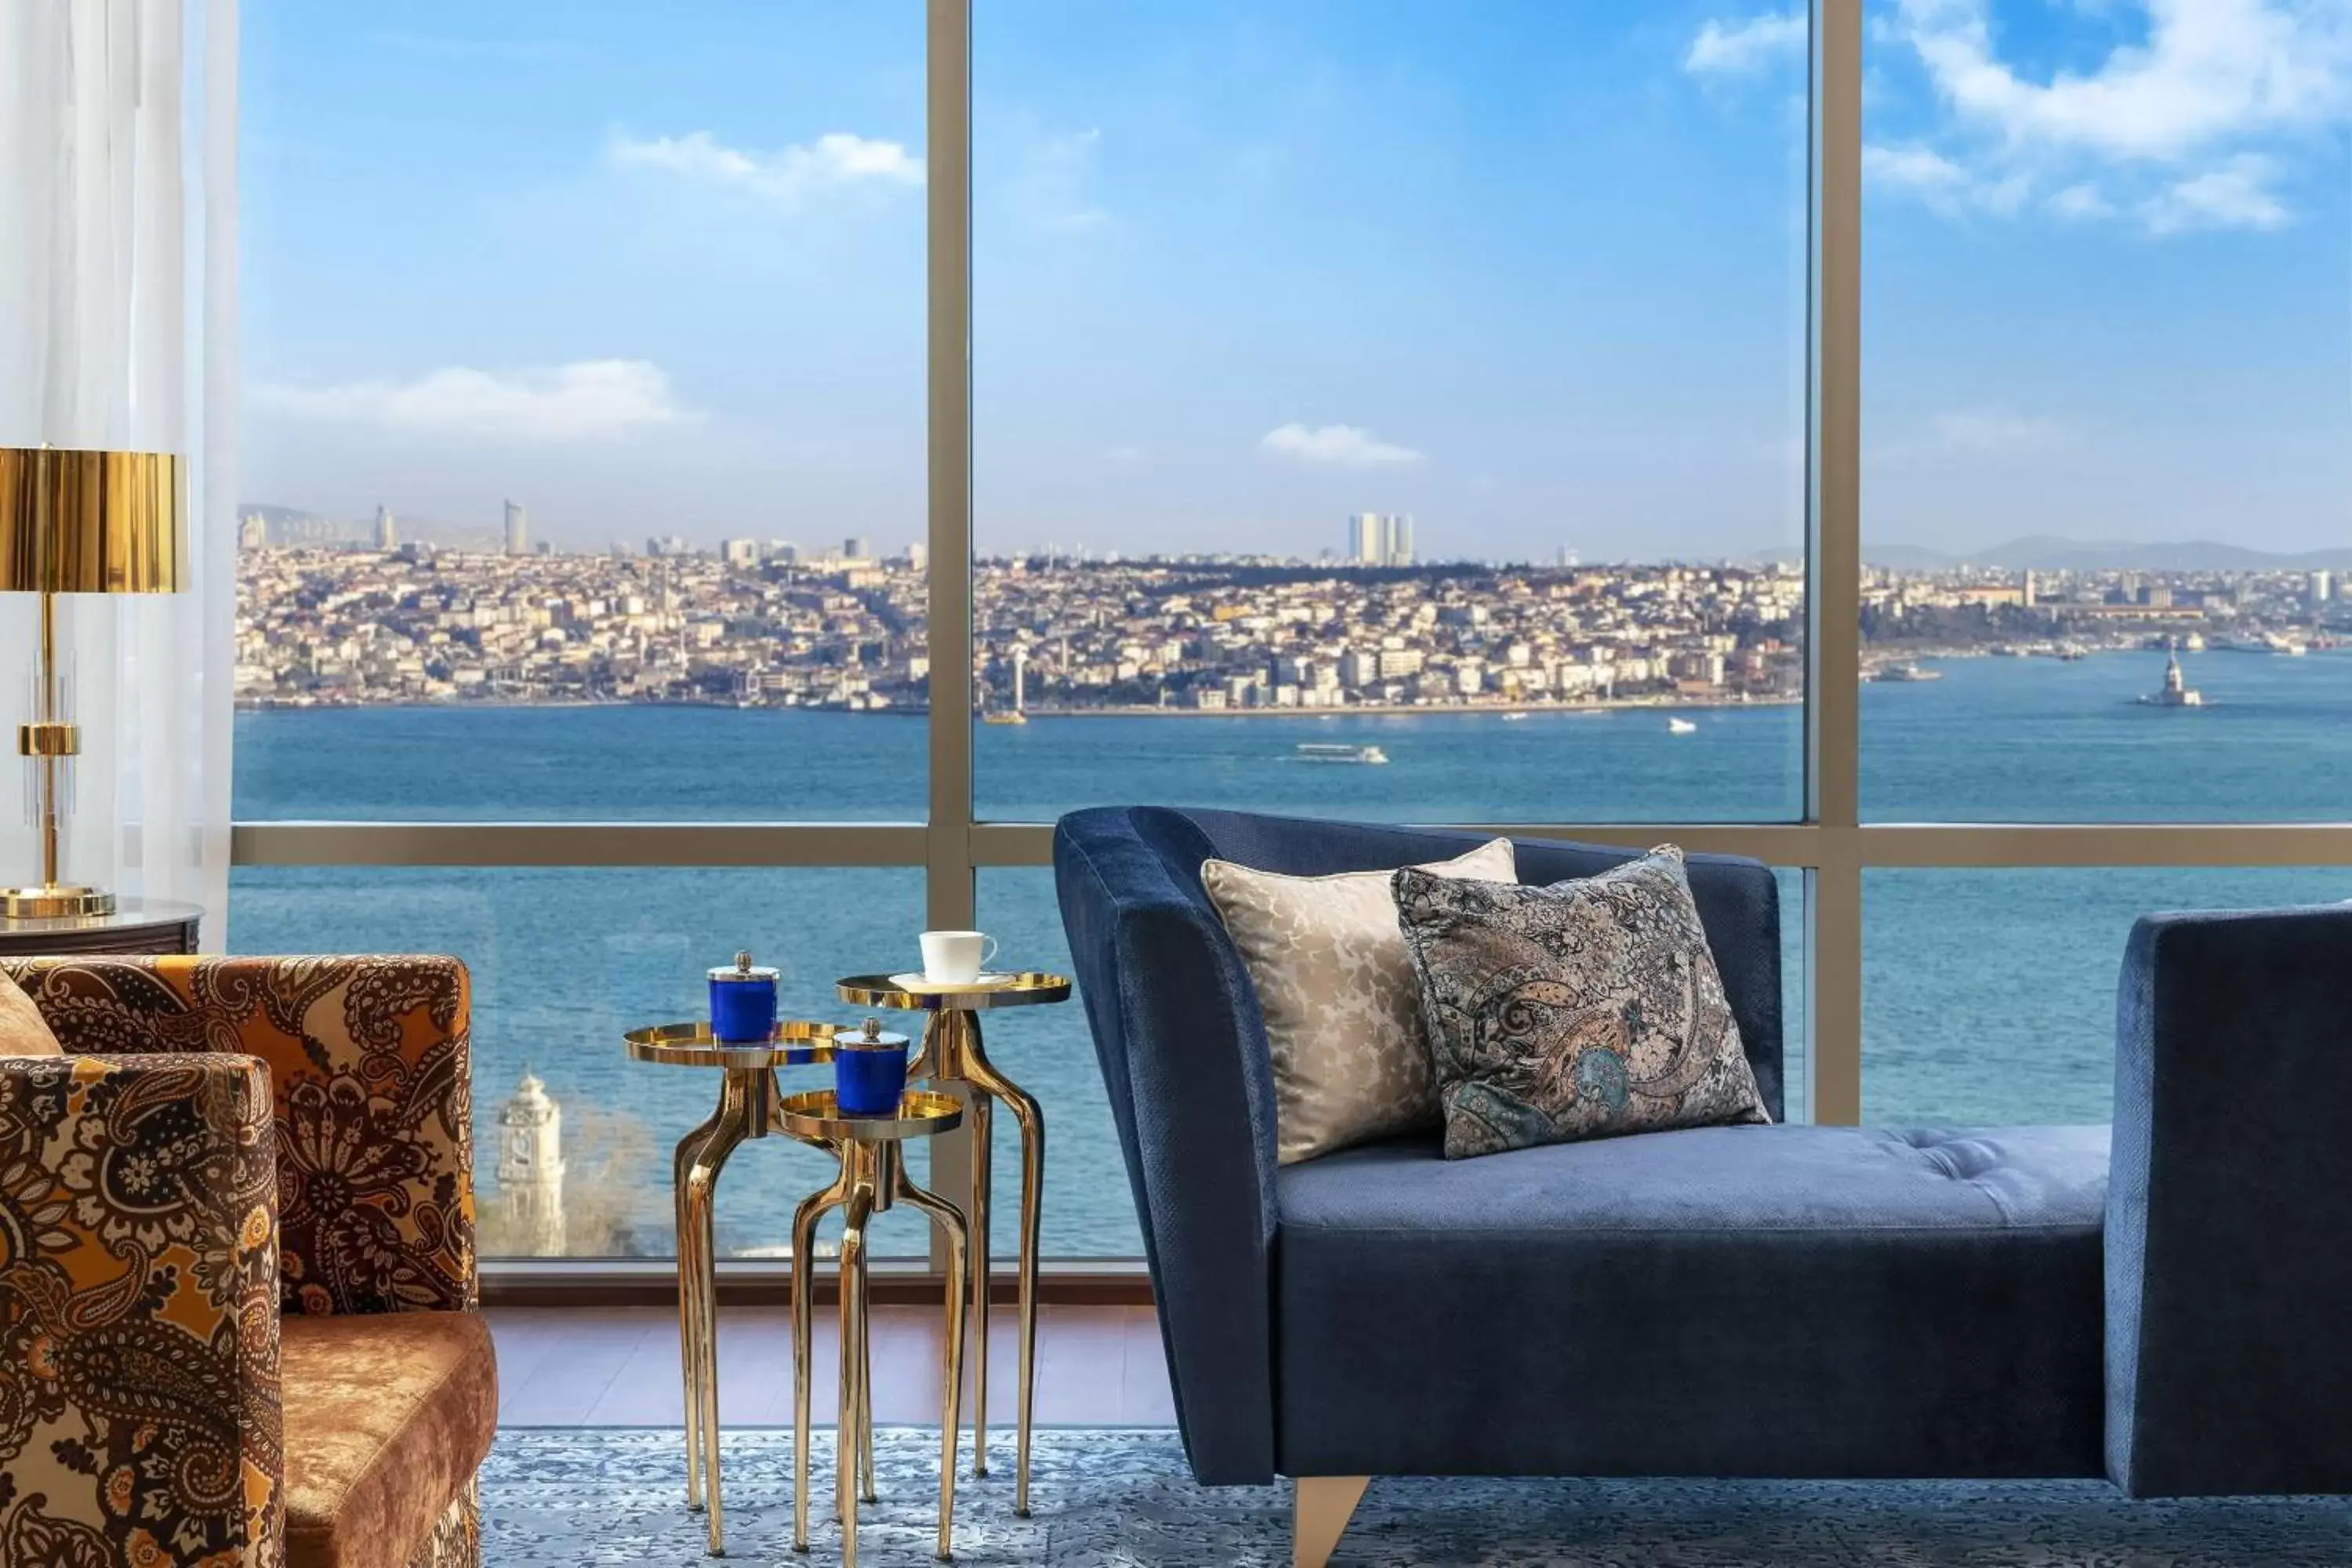 Bedroom in The Ritz-Carlton, Istanbul at the Bosphorus